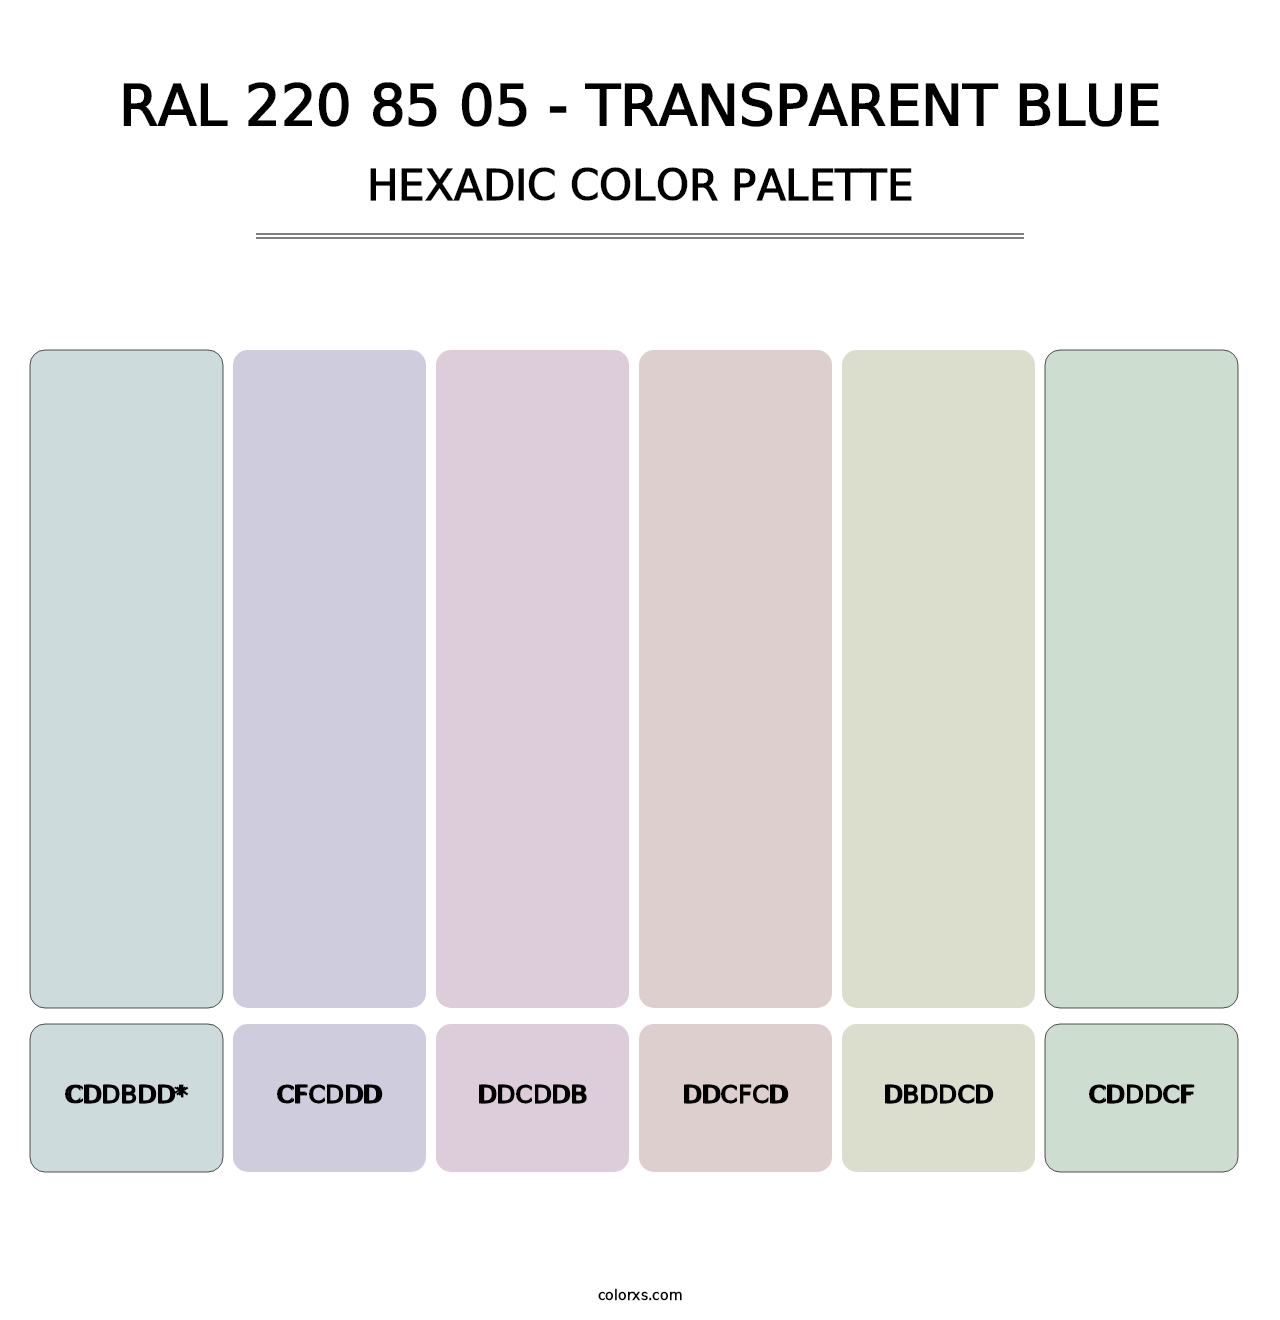 RAL 220 85 05 - Transparent Blue - Hexadic Color Palette